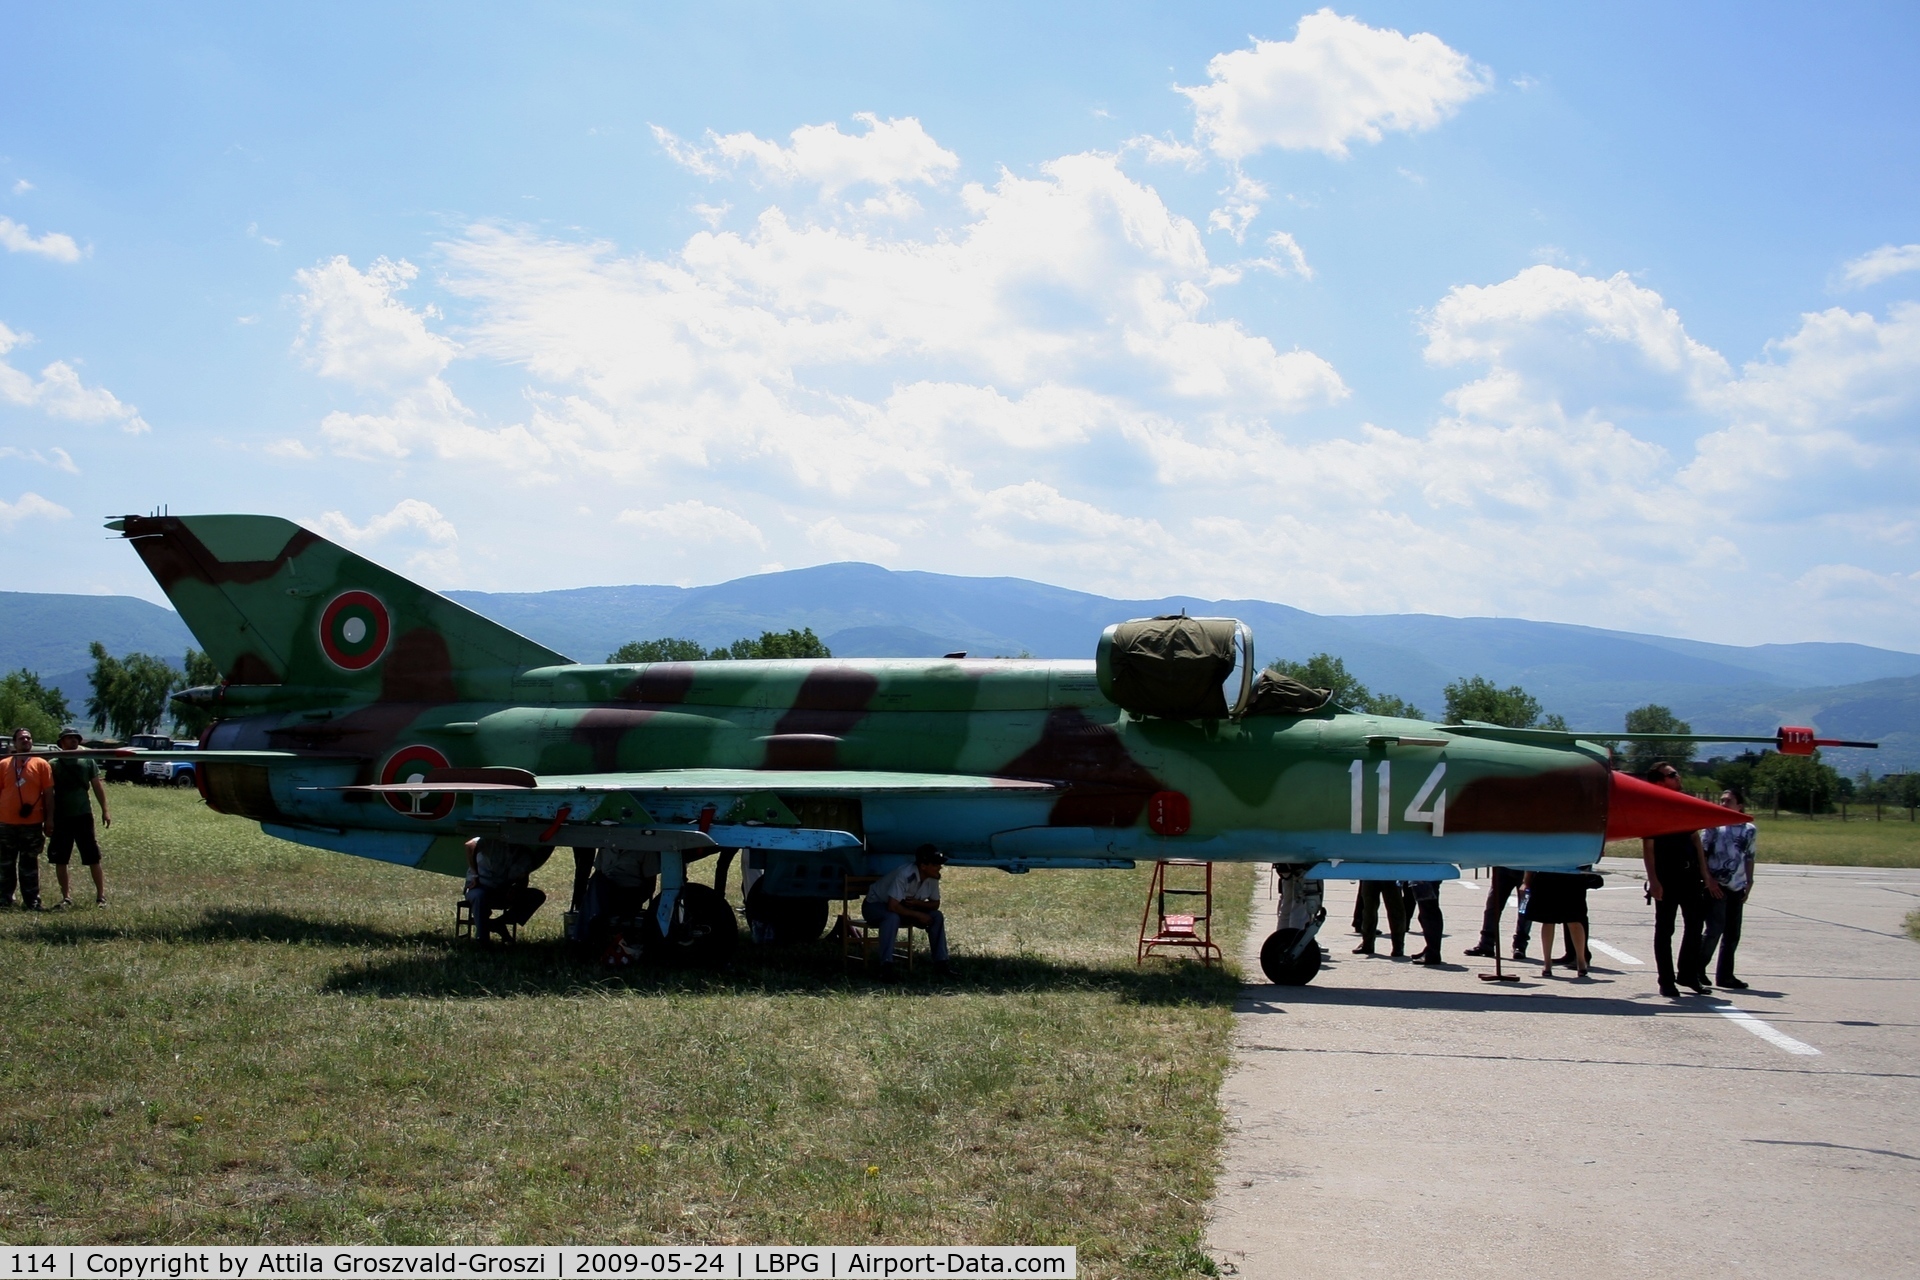 114, 1985 Mikoyan-Gurevich MiG-21bis SAU C/N 75094114, BIAF 09 Bulgaria Plovdiv (Krumovo) LBPG Graf Ignatievo Military Air Base - (SAU referring to Sistema Avtomaticheskovo Upravleniya = 